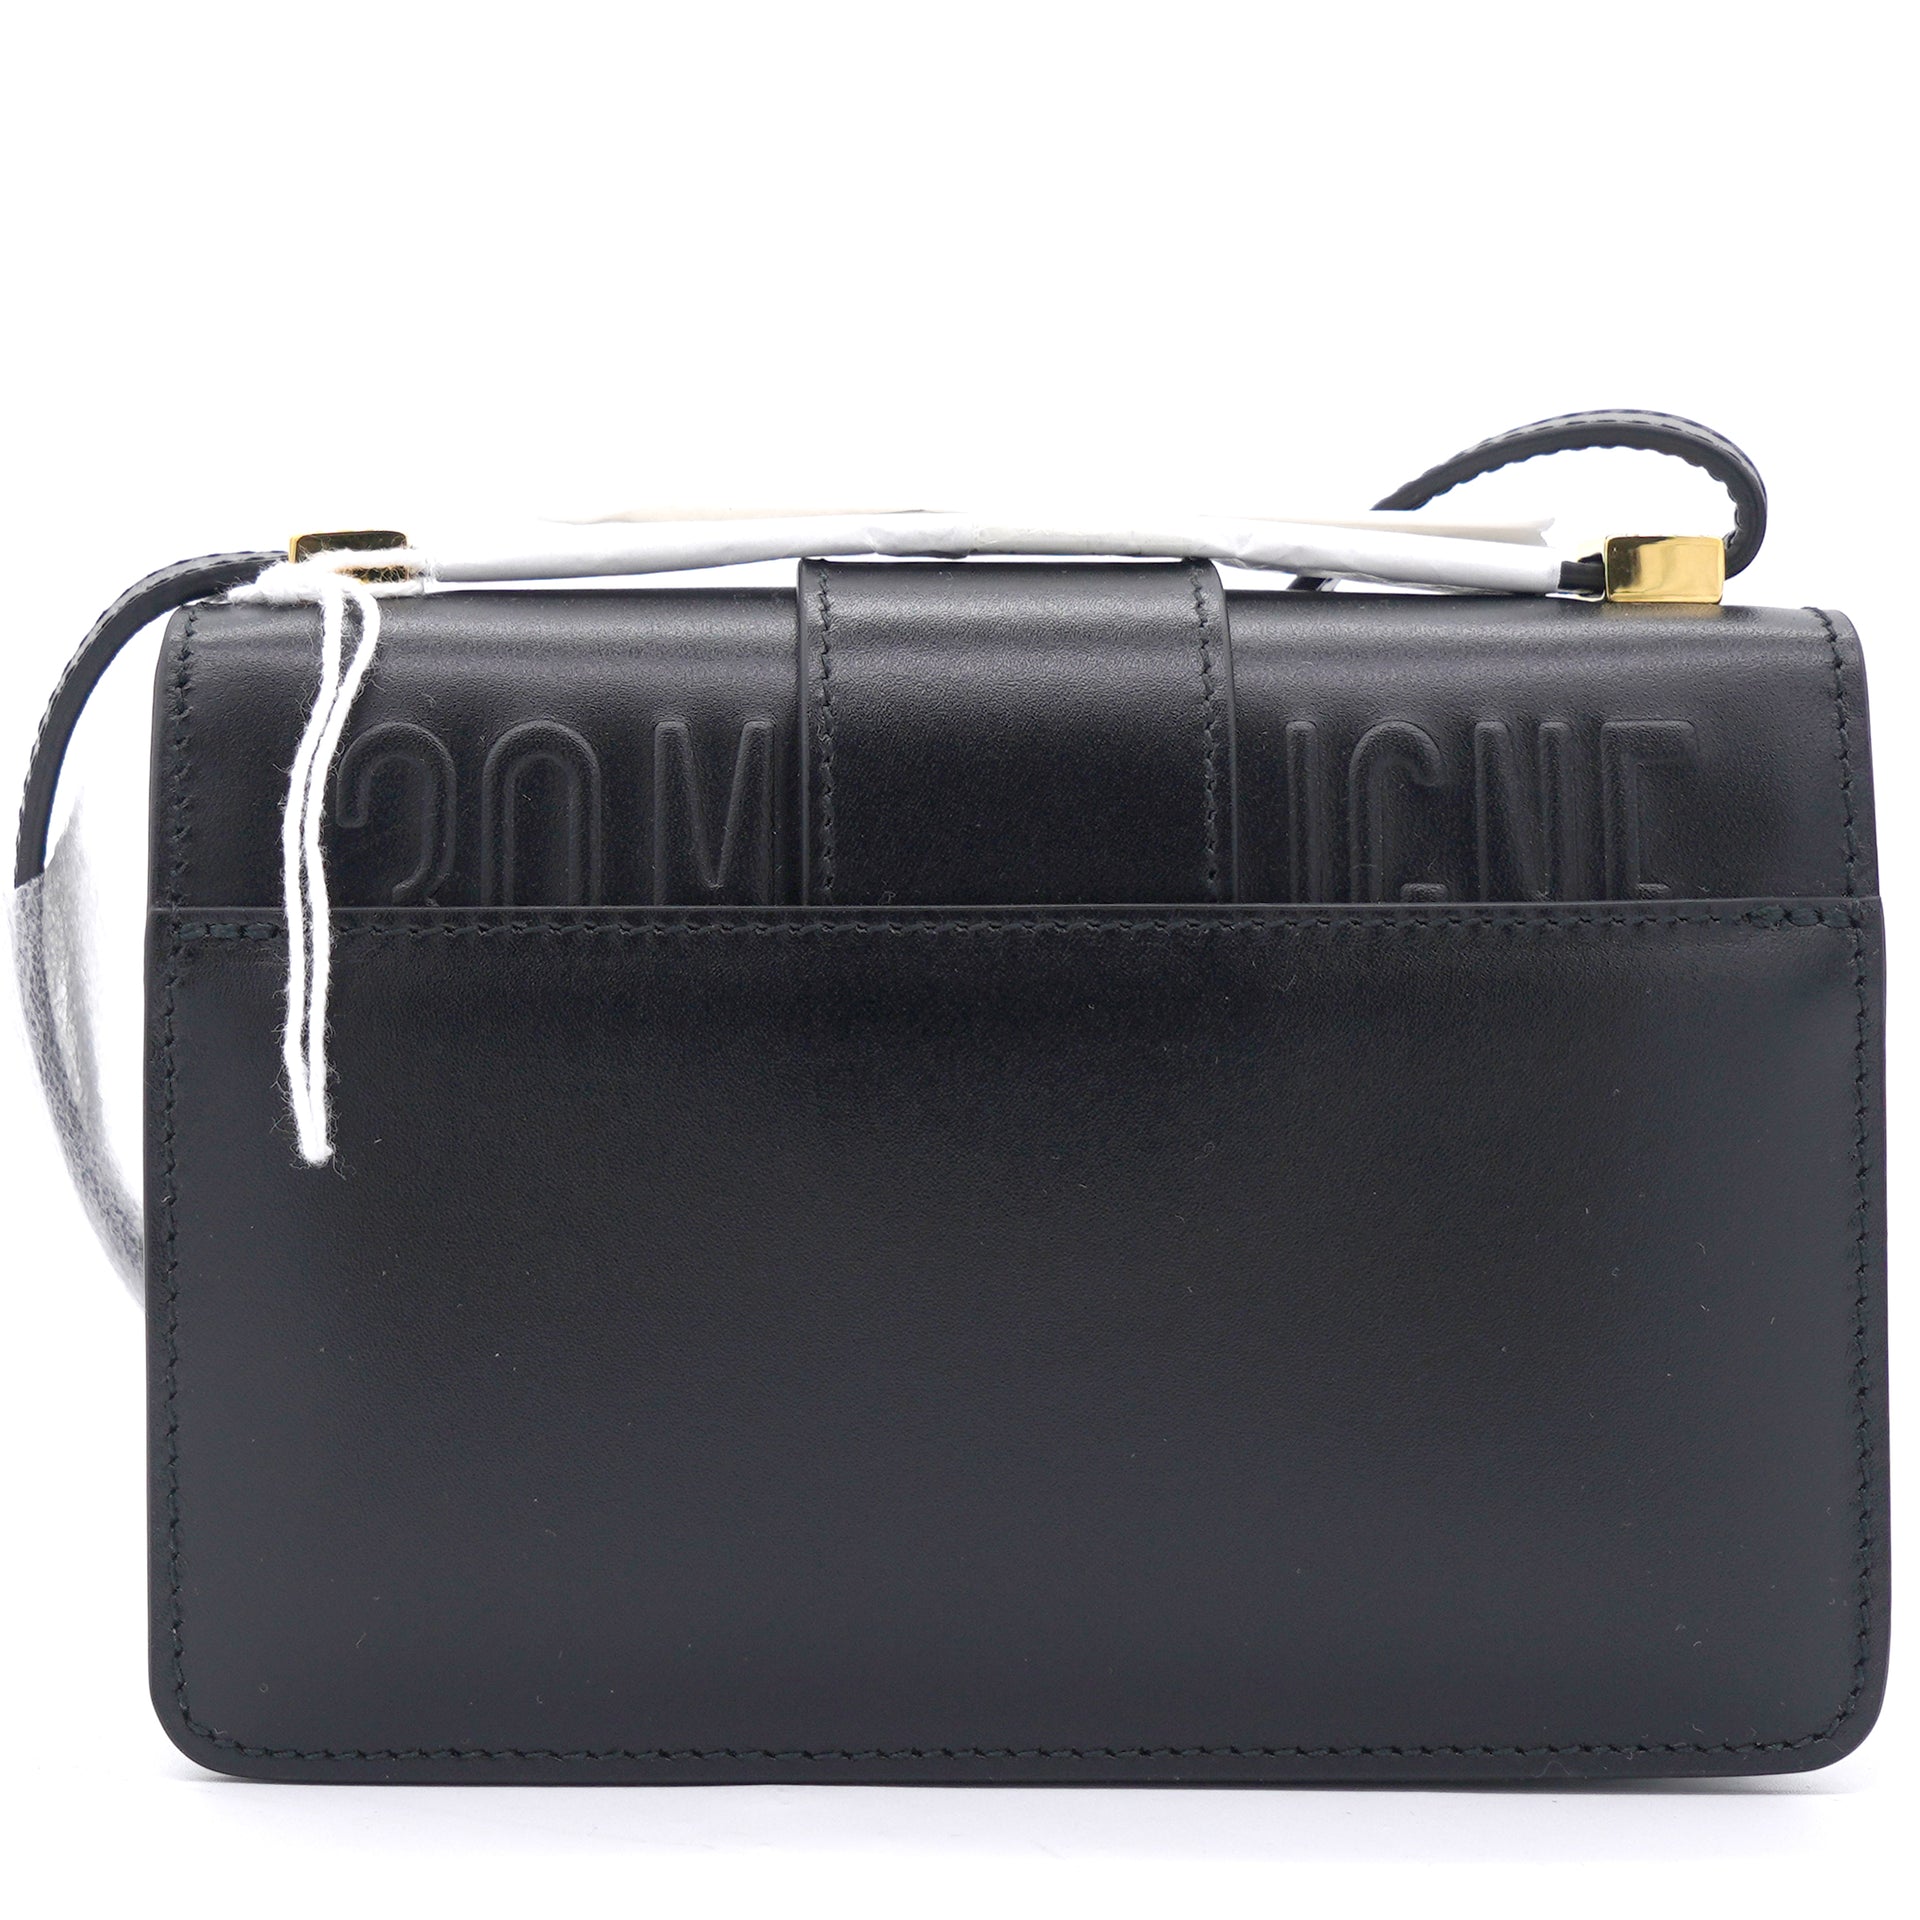 30 montaigne box leather handbag Dior Black in Leather  31580909